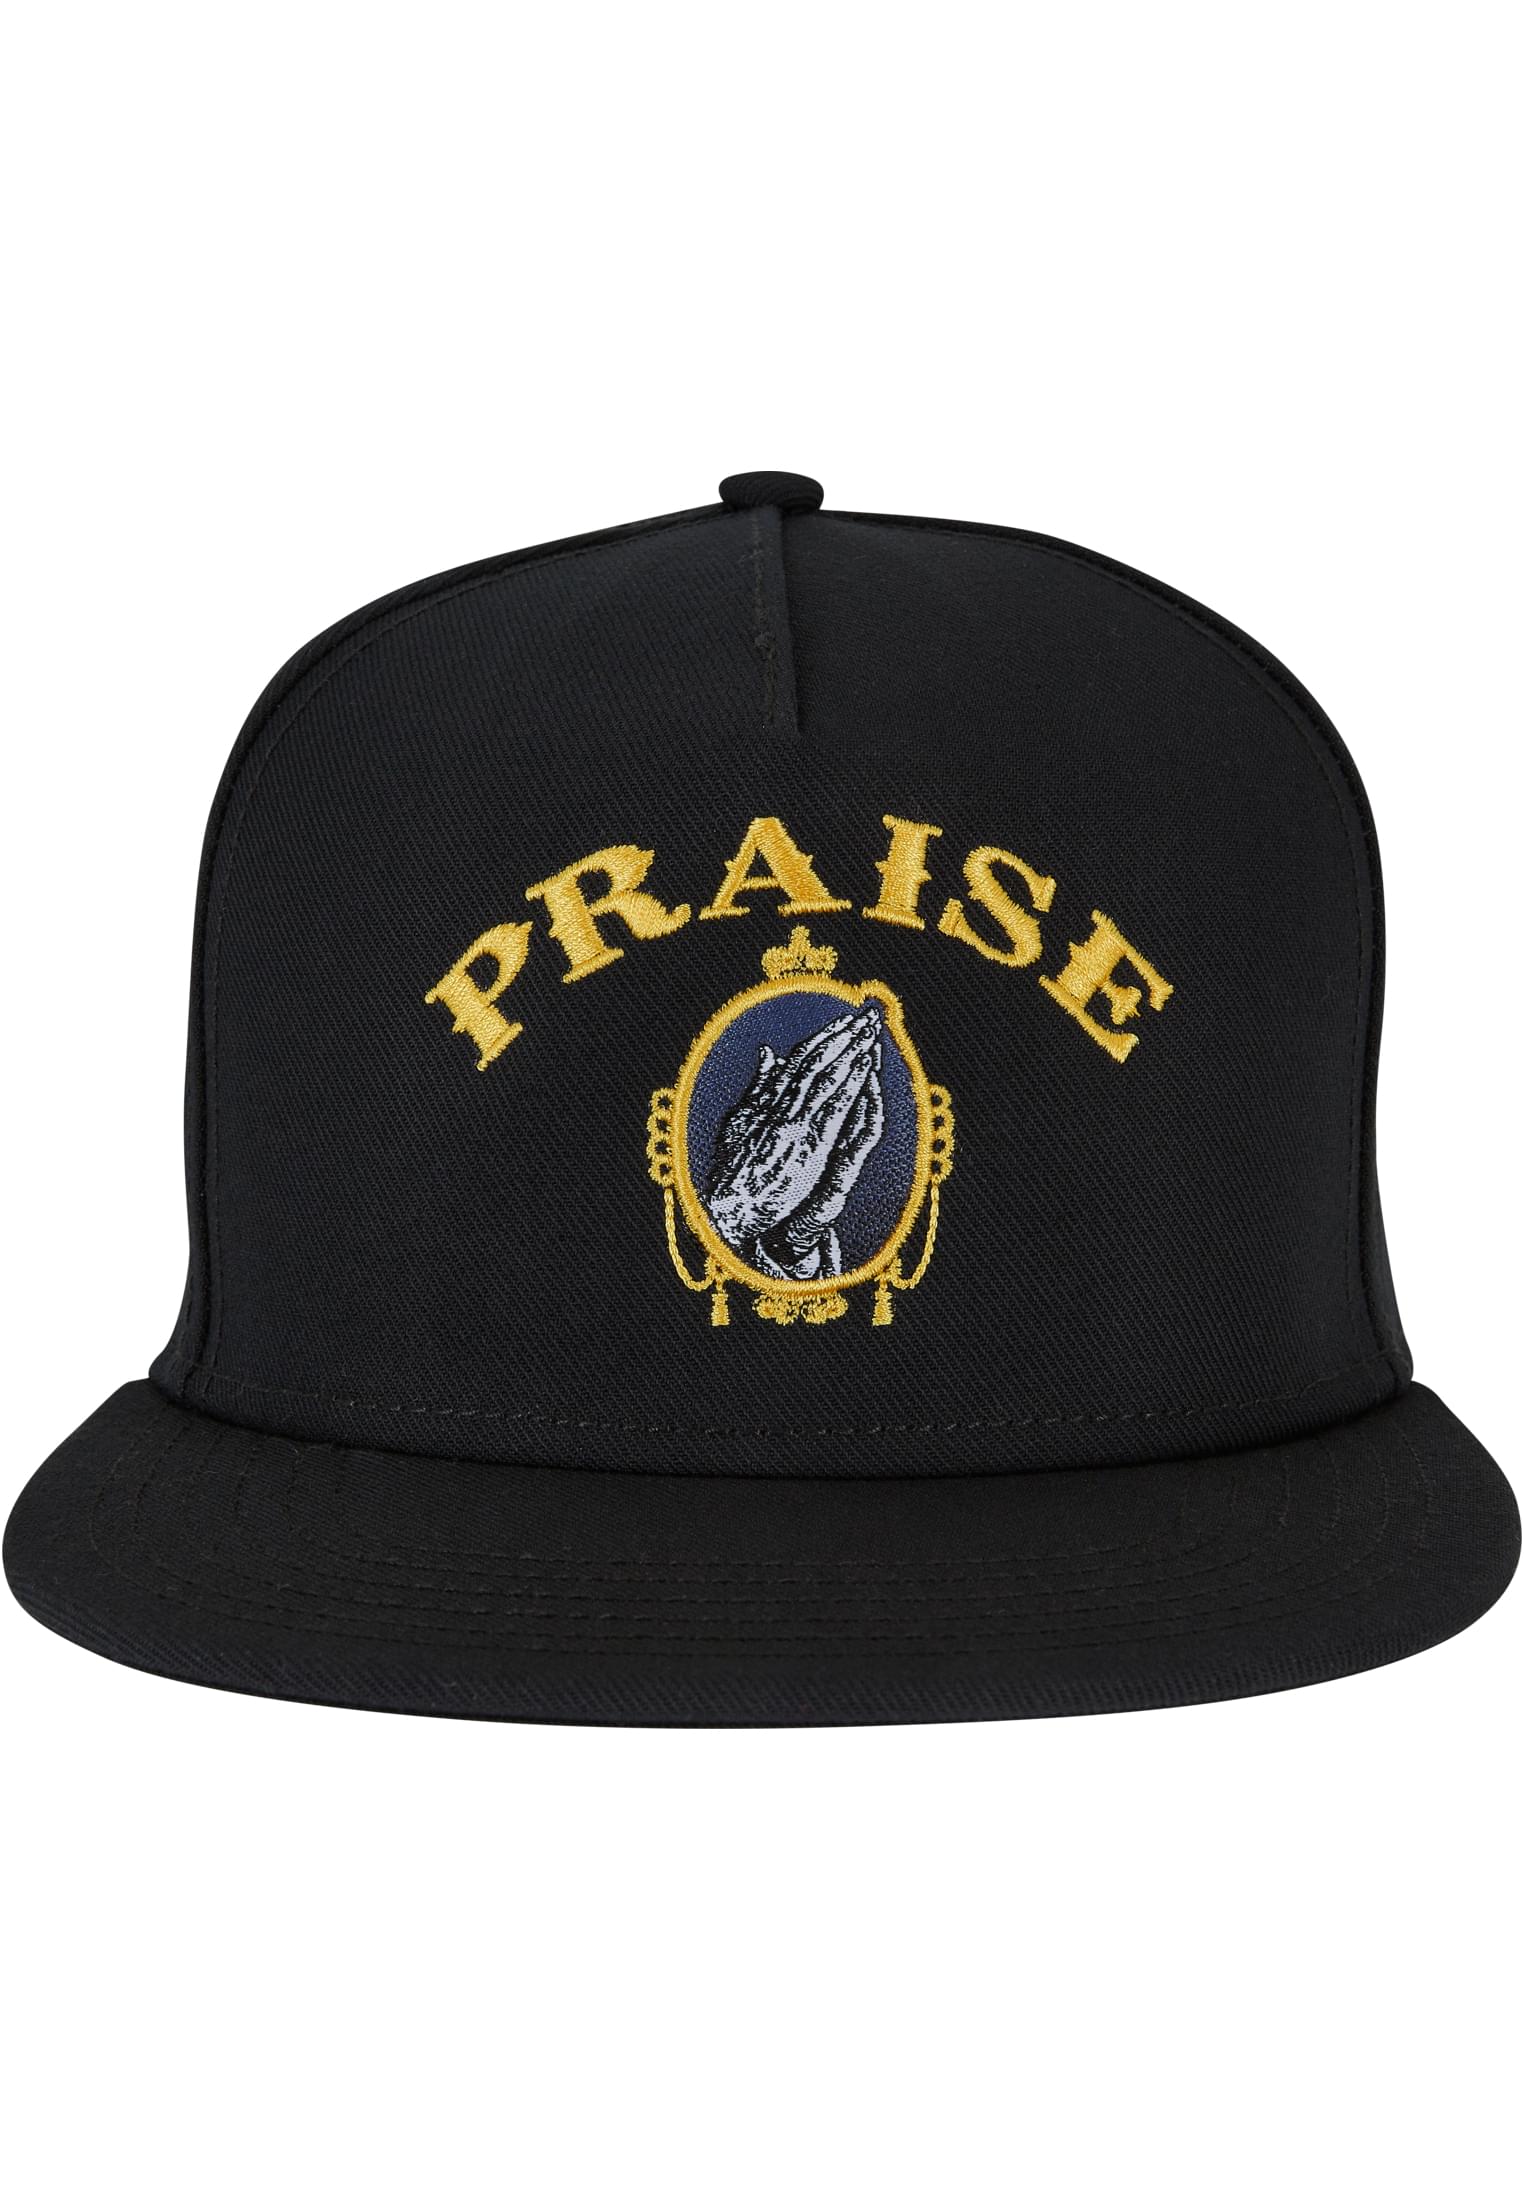 Praise Chronic P Cap black